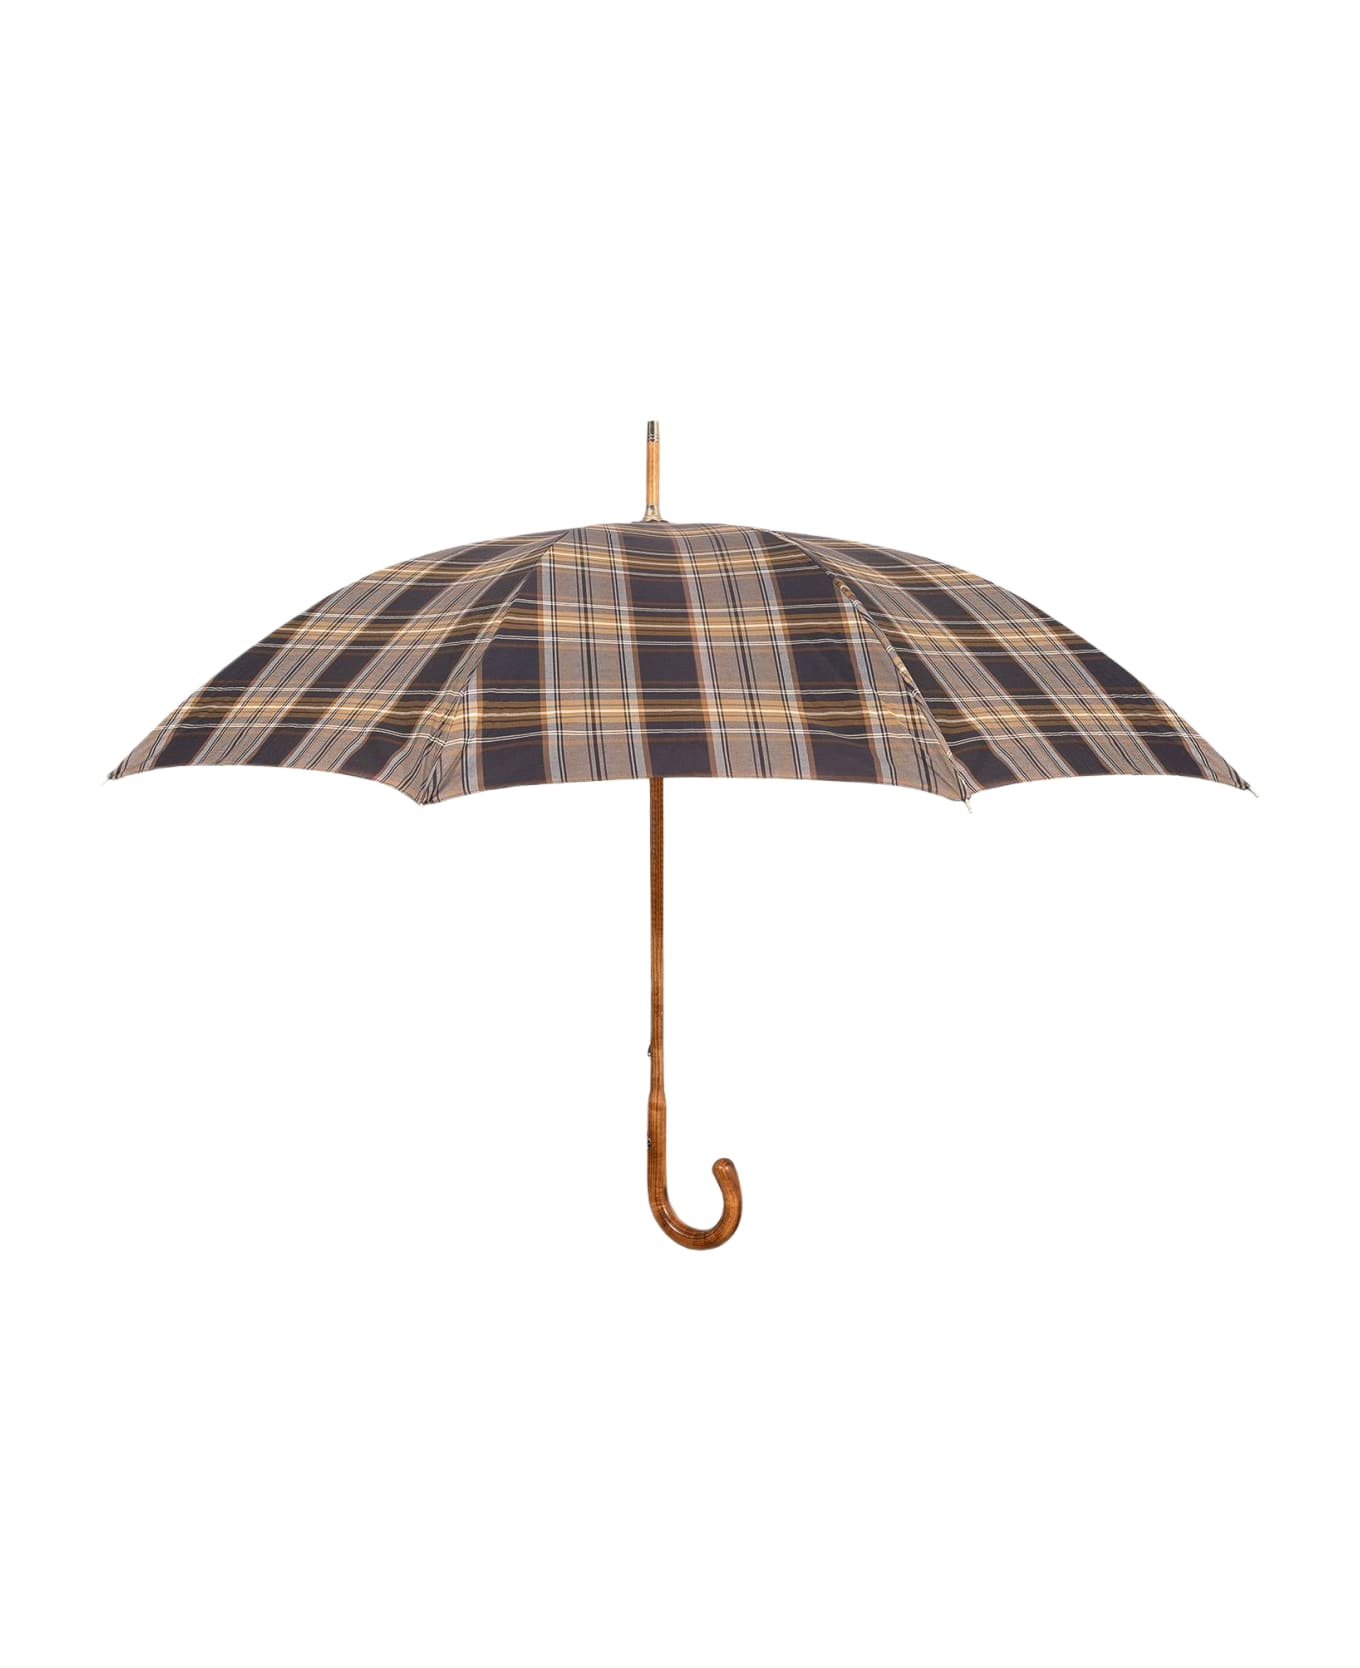 Larusmiani Umbrella 'tartan' Umbrella - Brown